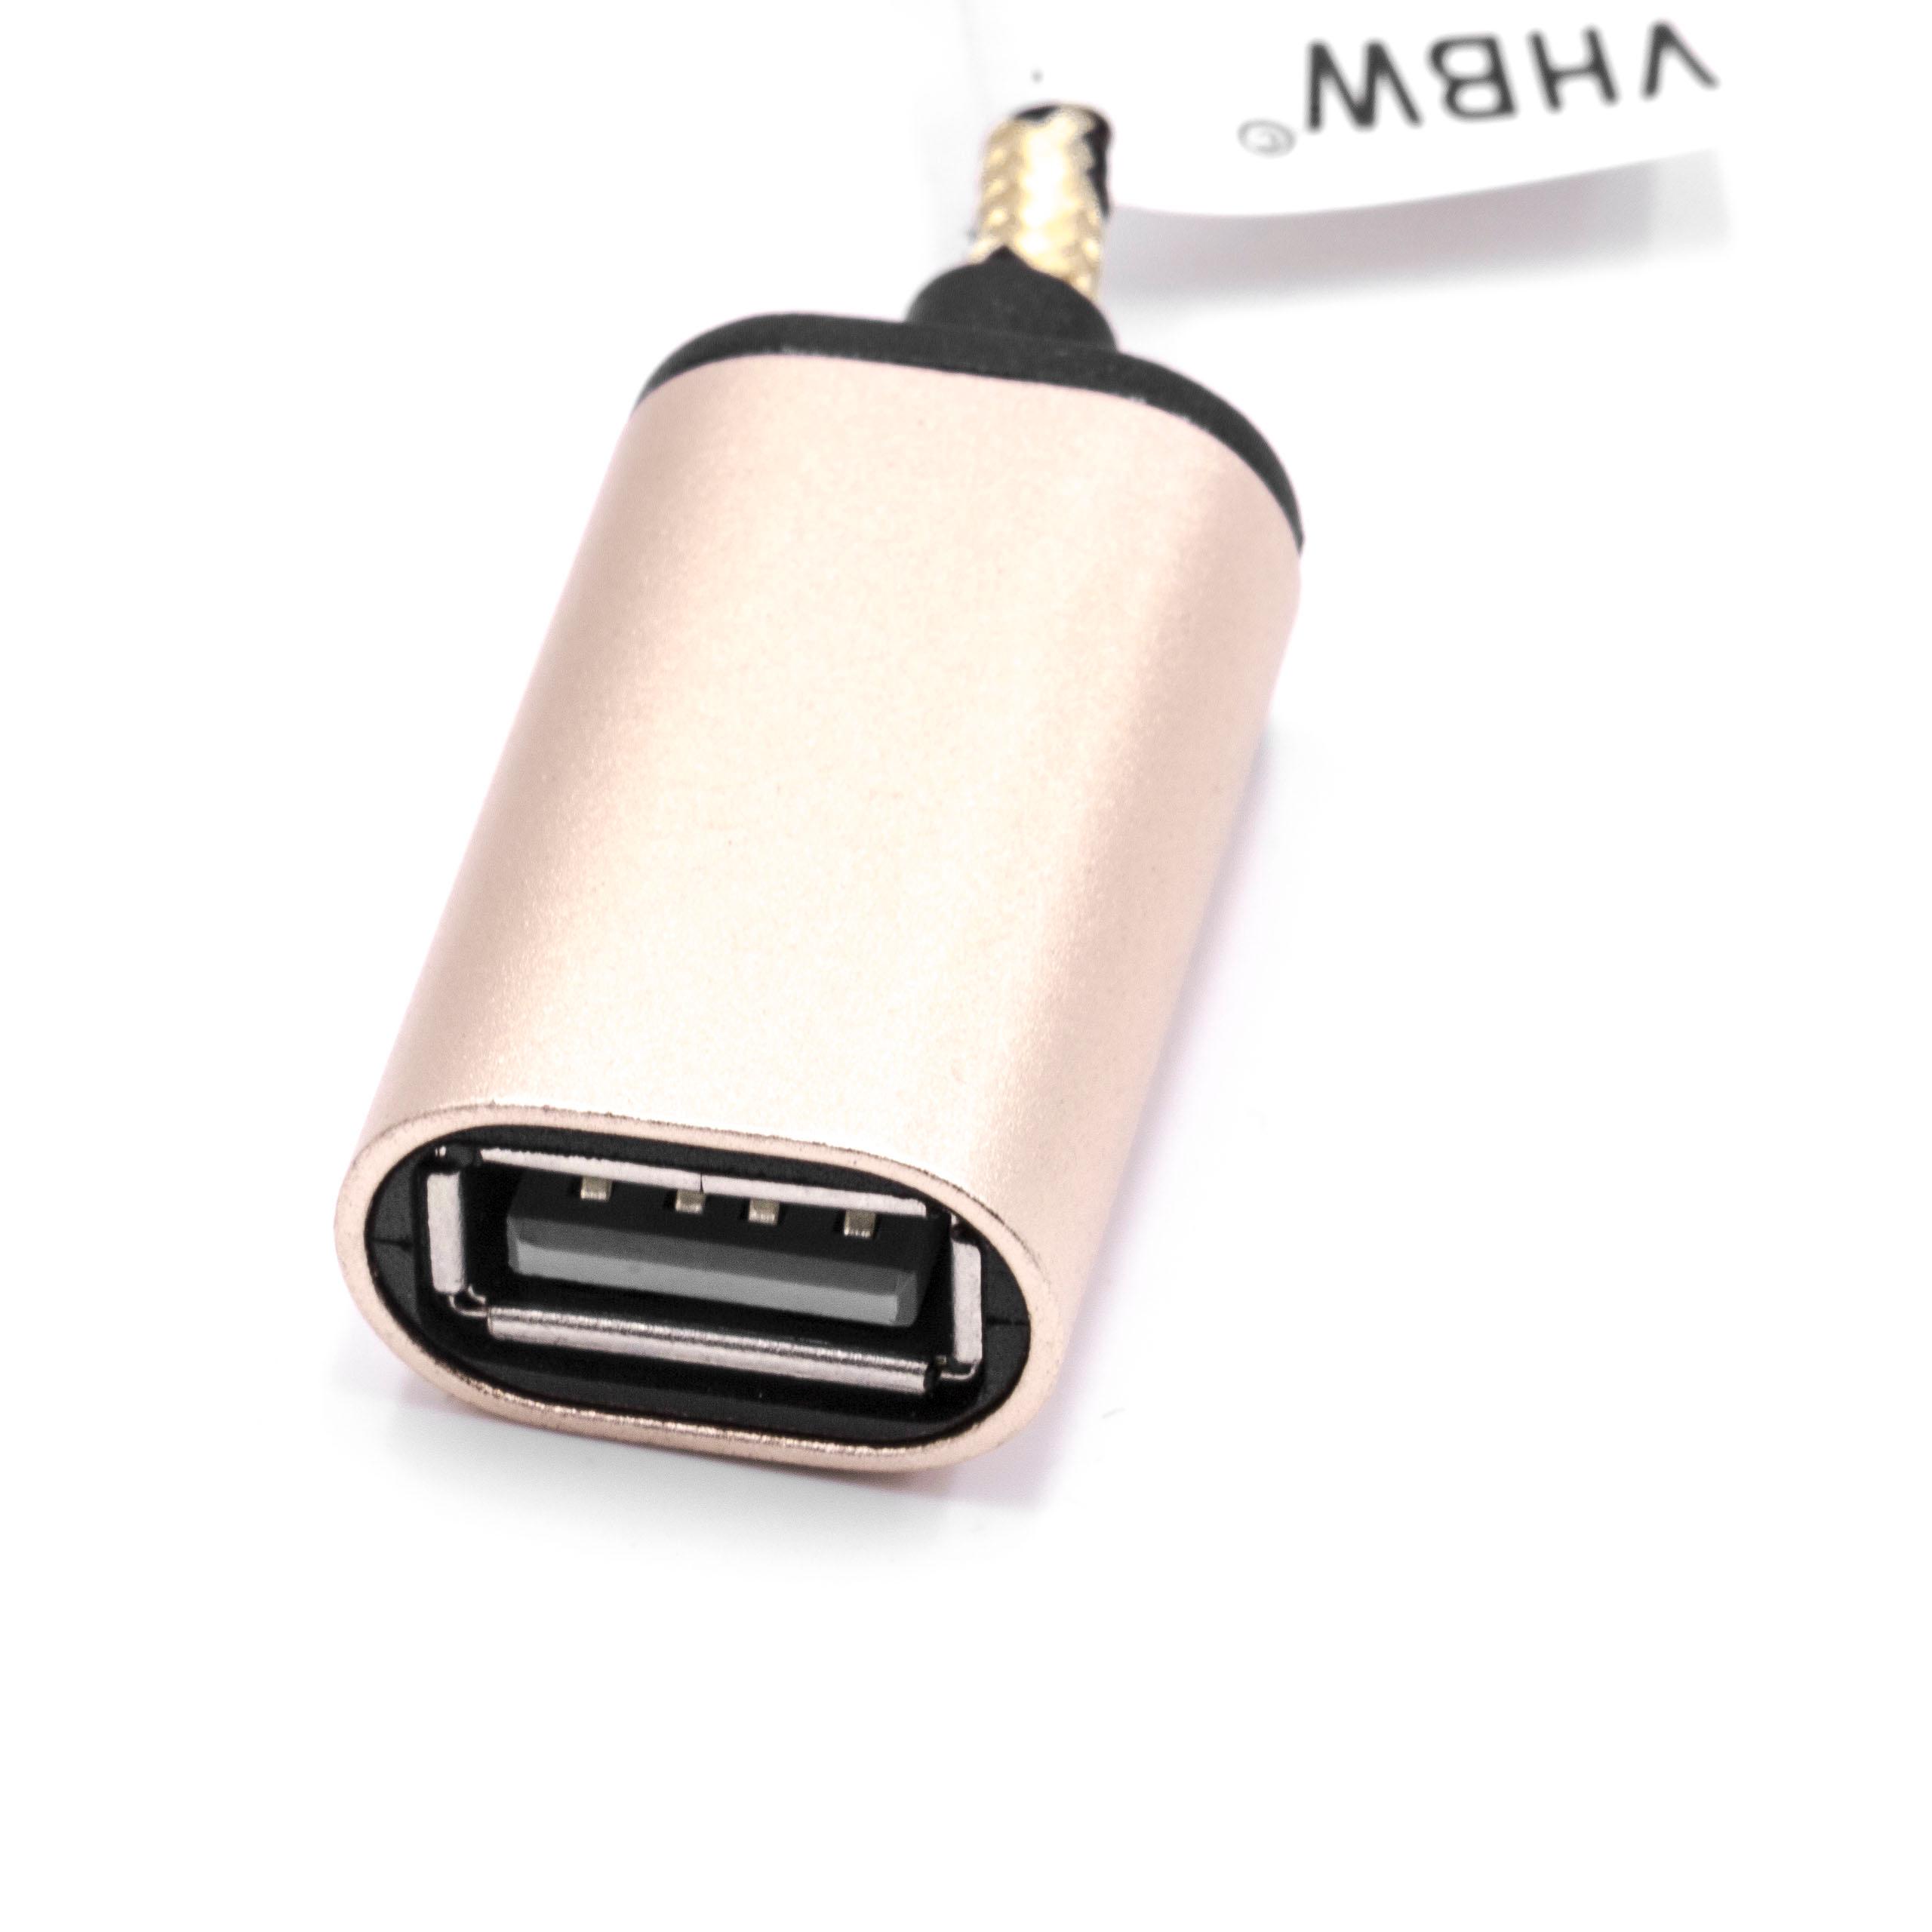 Adattatore OTG dapresa USB-3.1 tipo C a connettore USB 2.0 A per smartphone, tablet, laptop